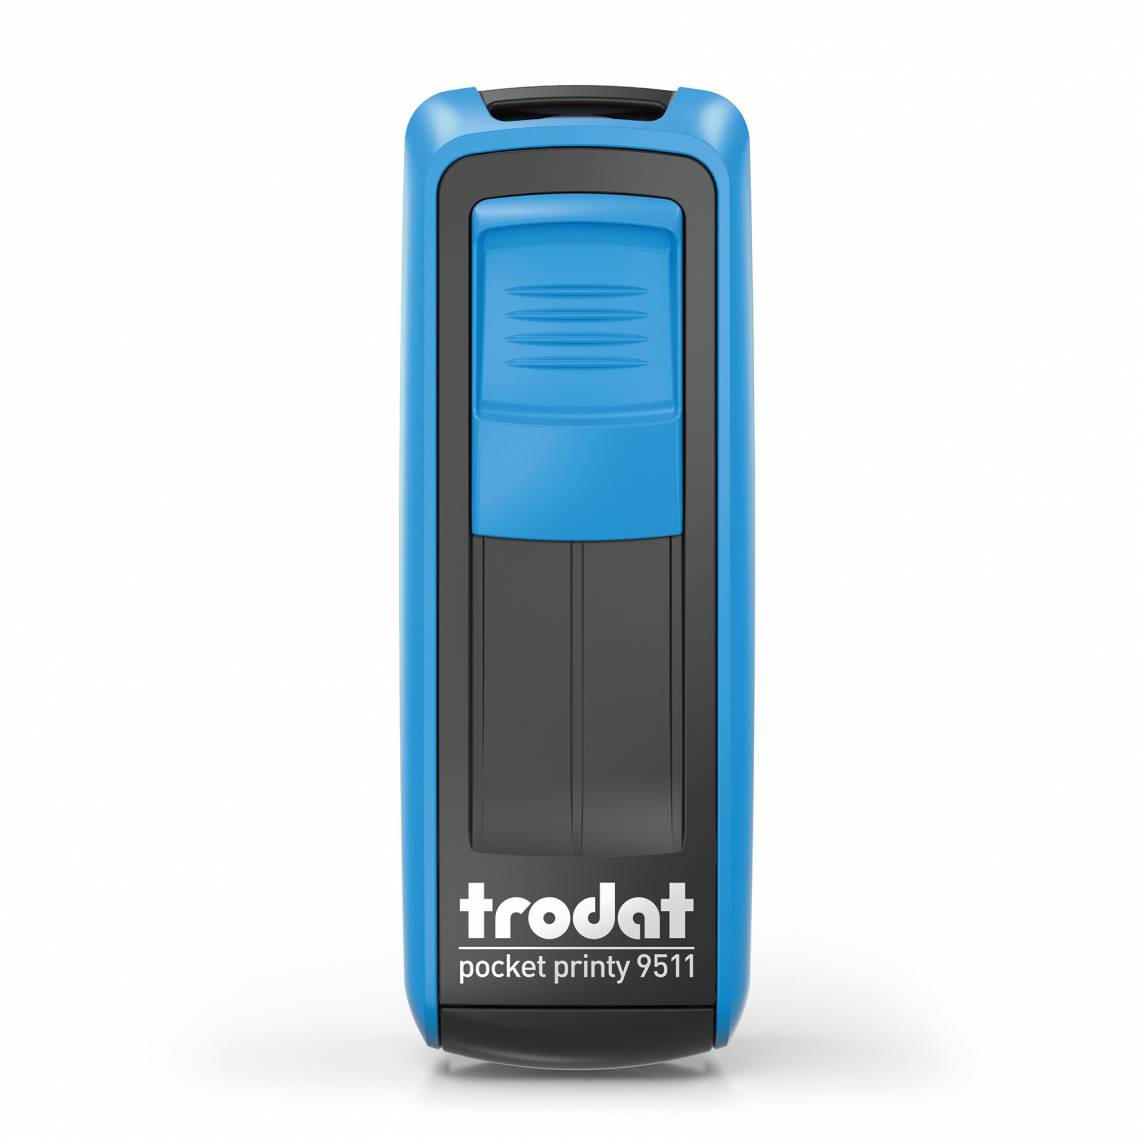 trodat - Kontaktdatenstempel PocketPrinty 9511 - Schwarz-blau - frei